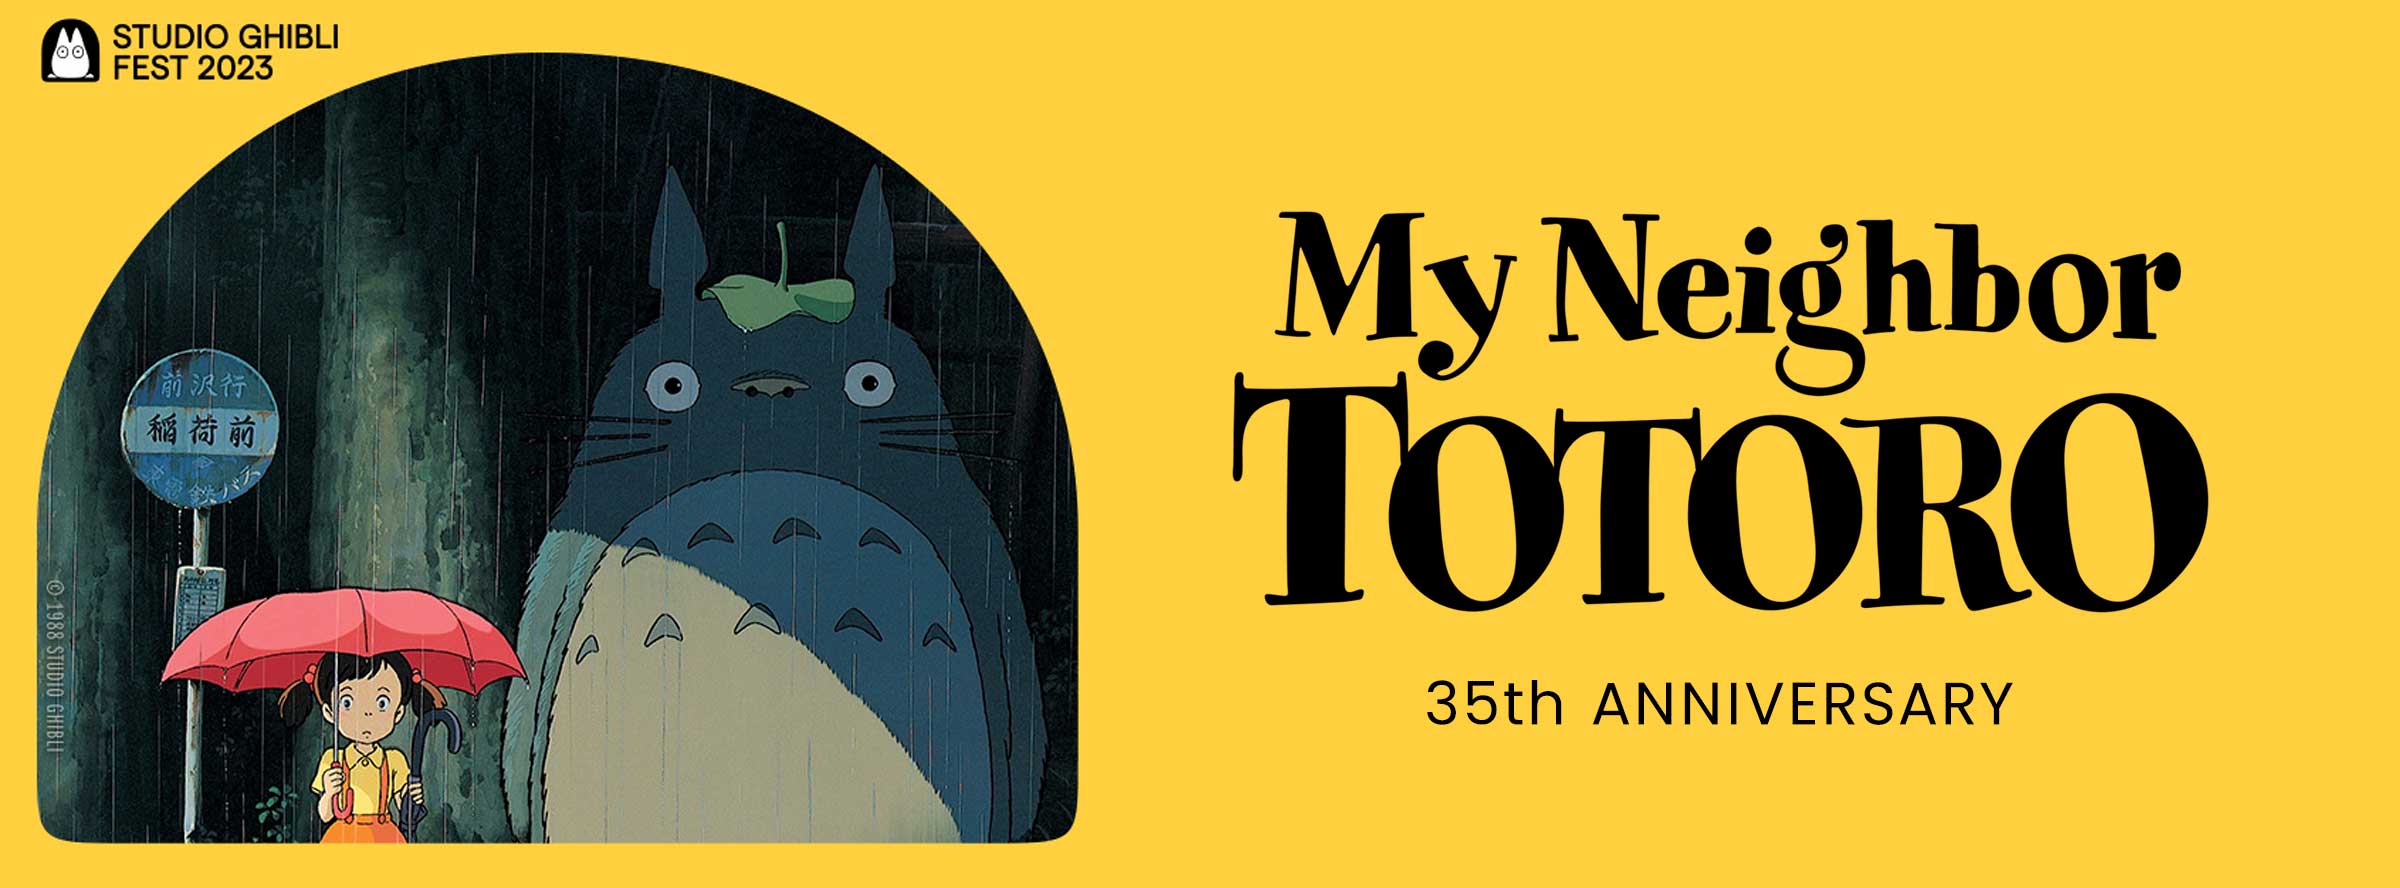 Slider Image for My Neighbor Totoro 35th Anniversary - Studio Ghibl